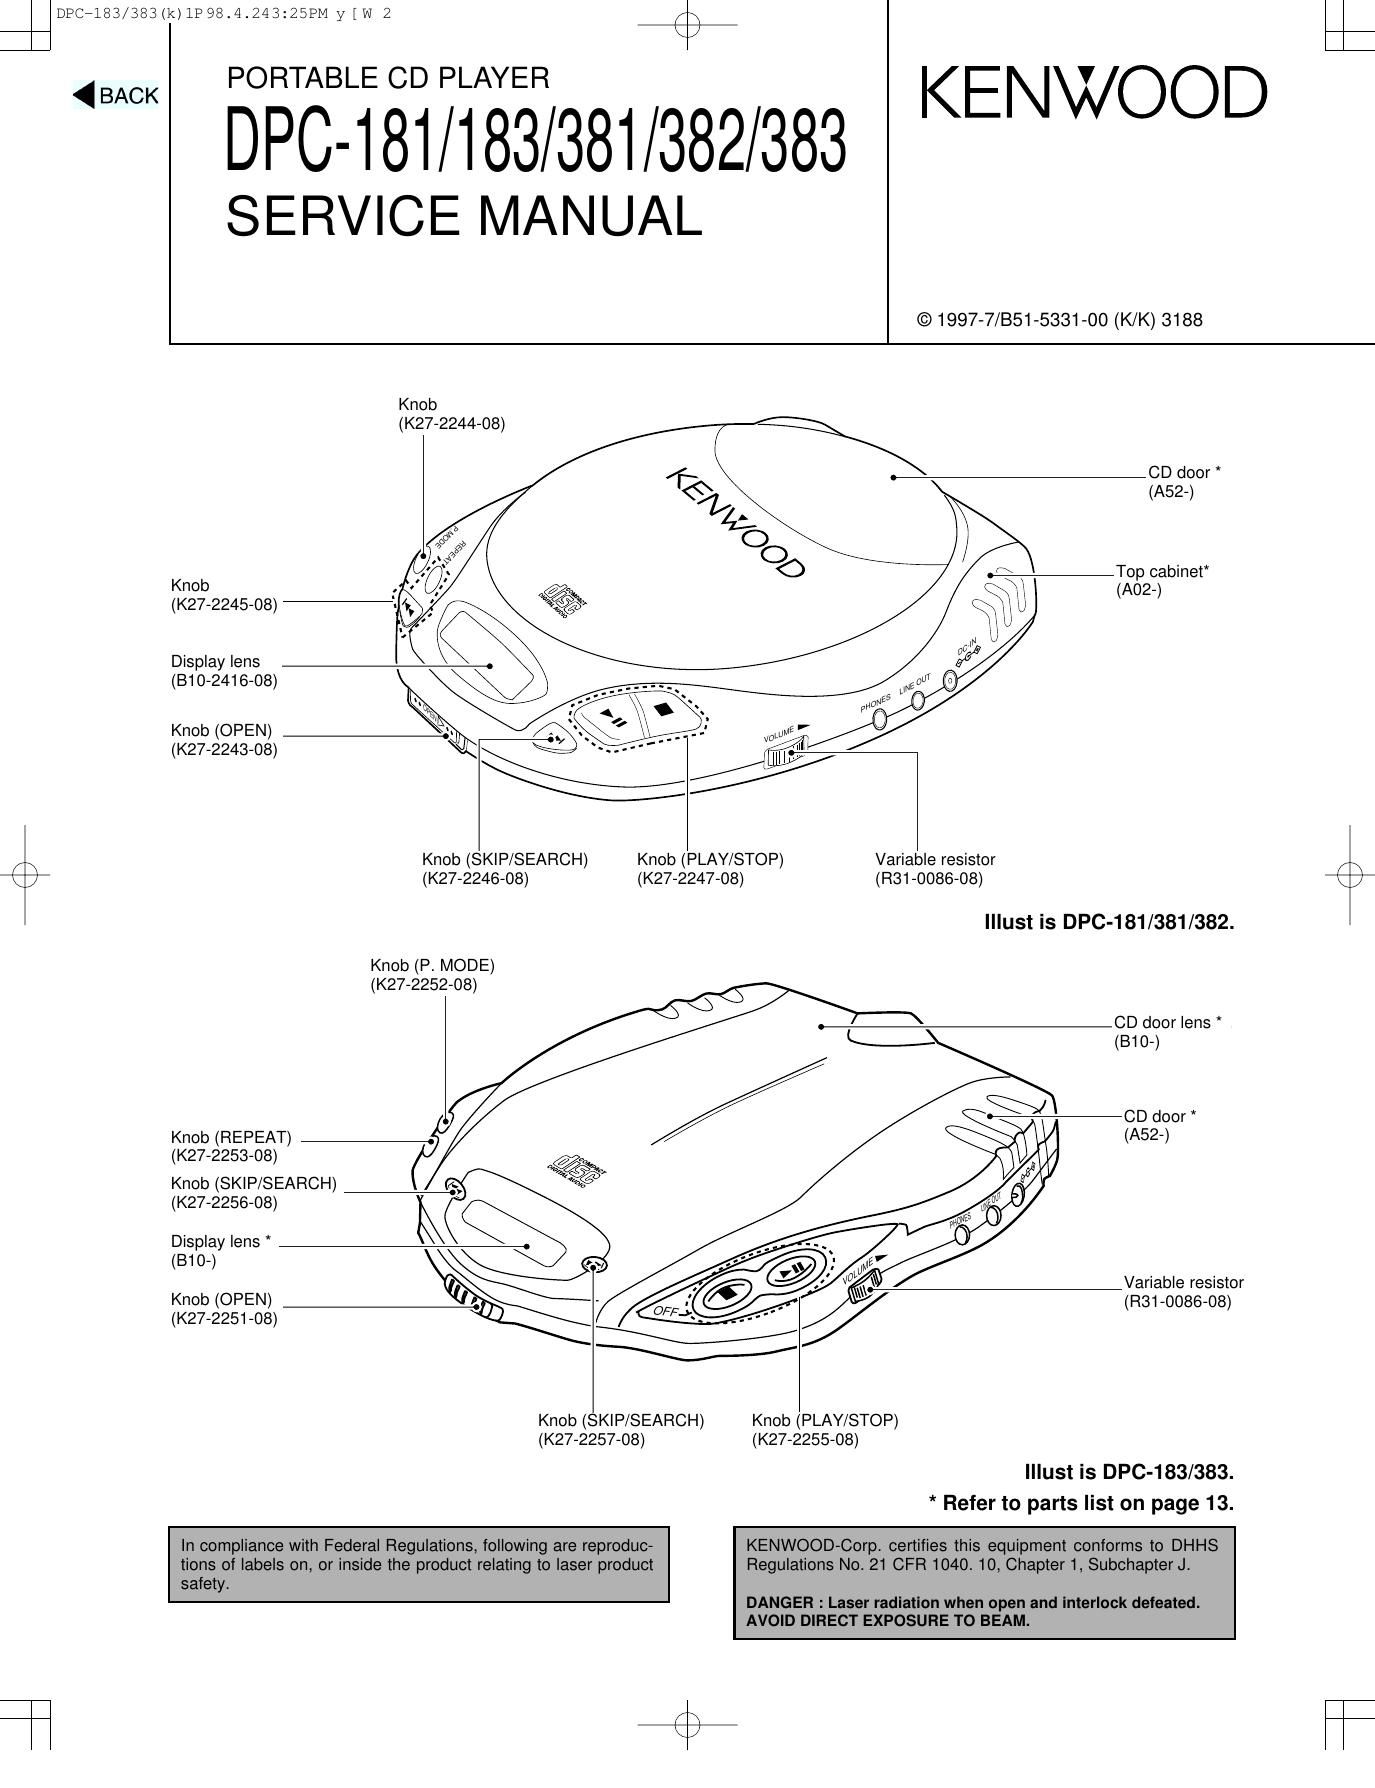 Kenwood DPC 183 Service Manual